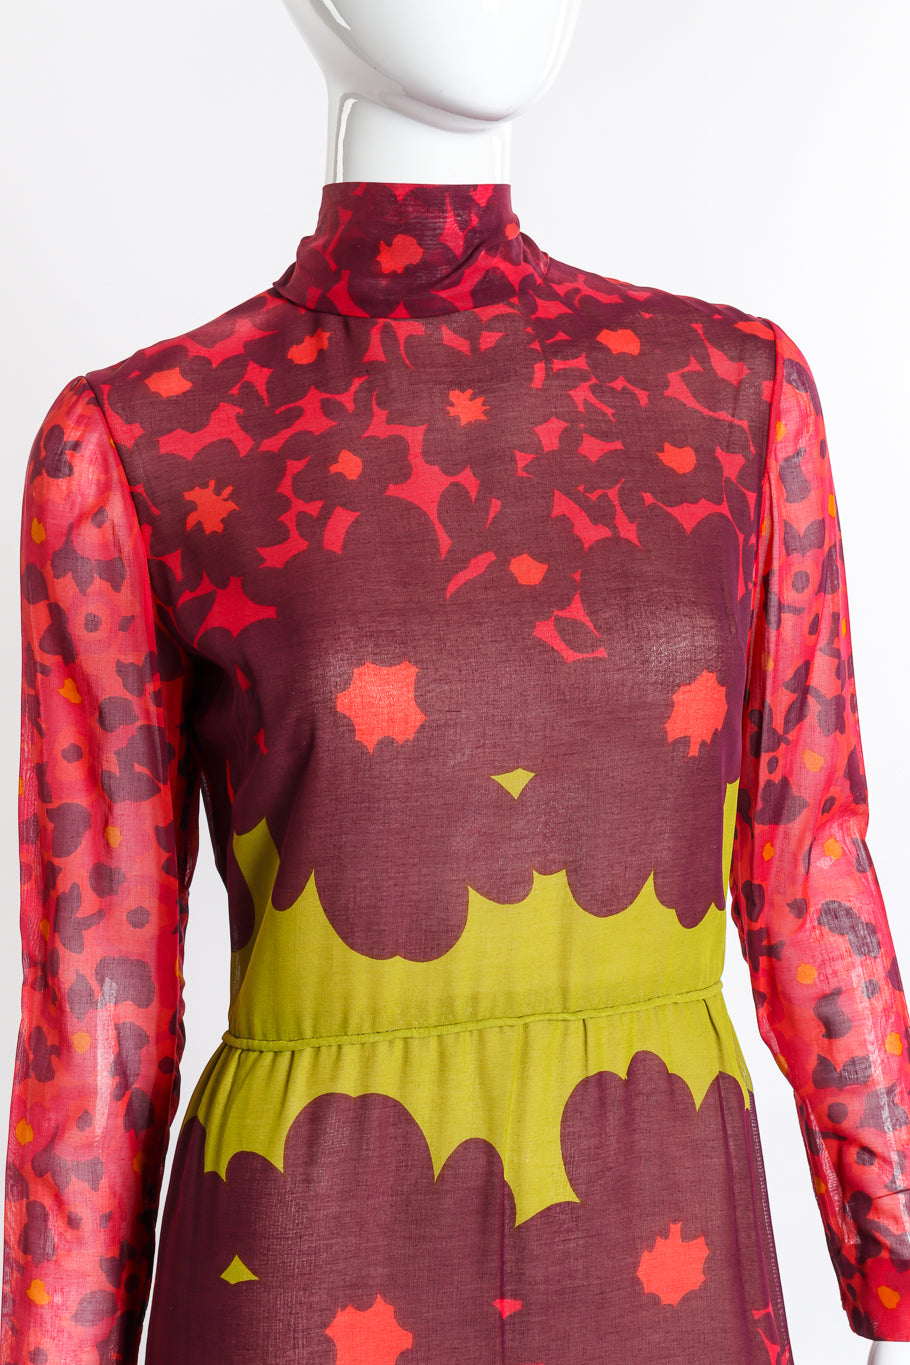 Vintage Bergdorf Goodman Poppy Print Turtleneck Dress front on mannequin closeup @recess la